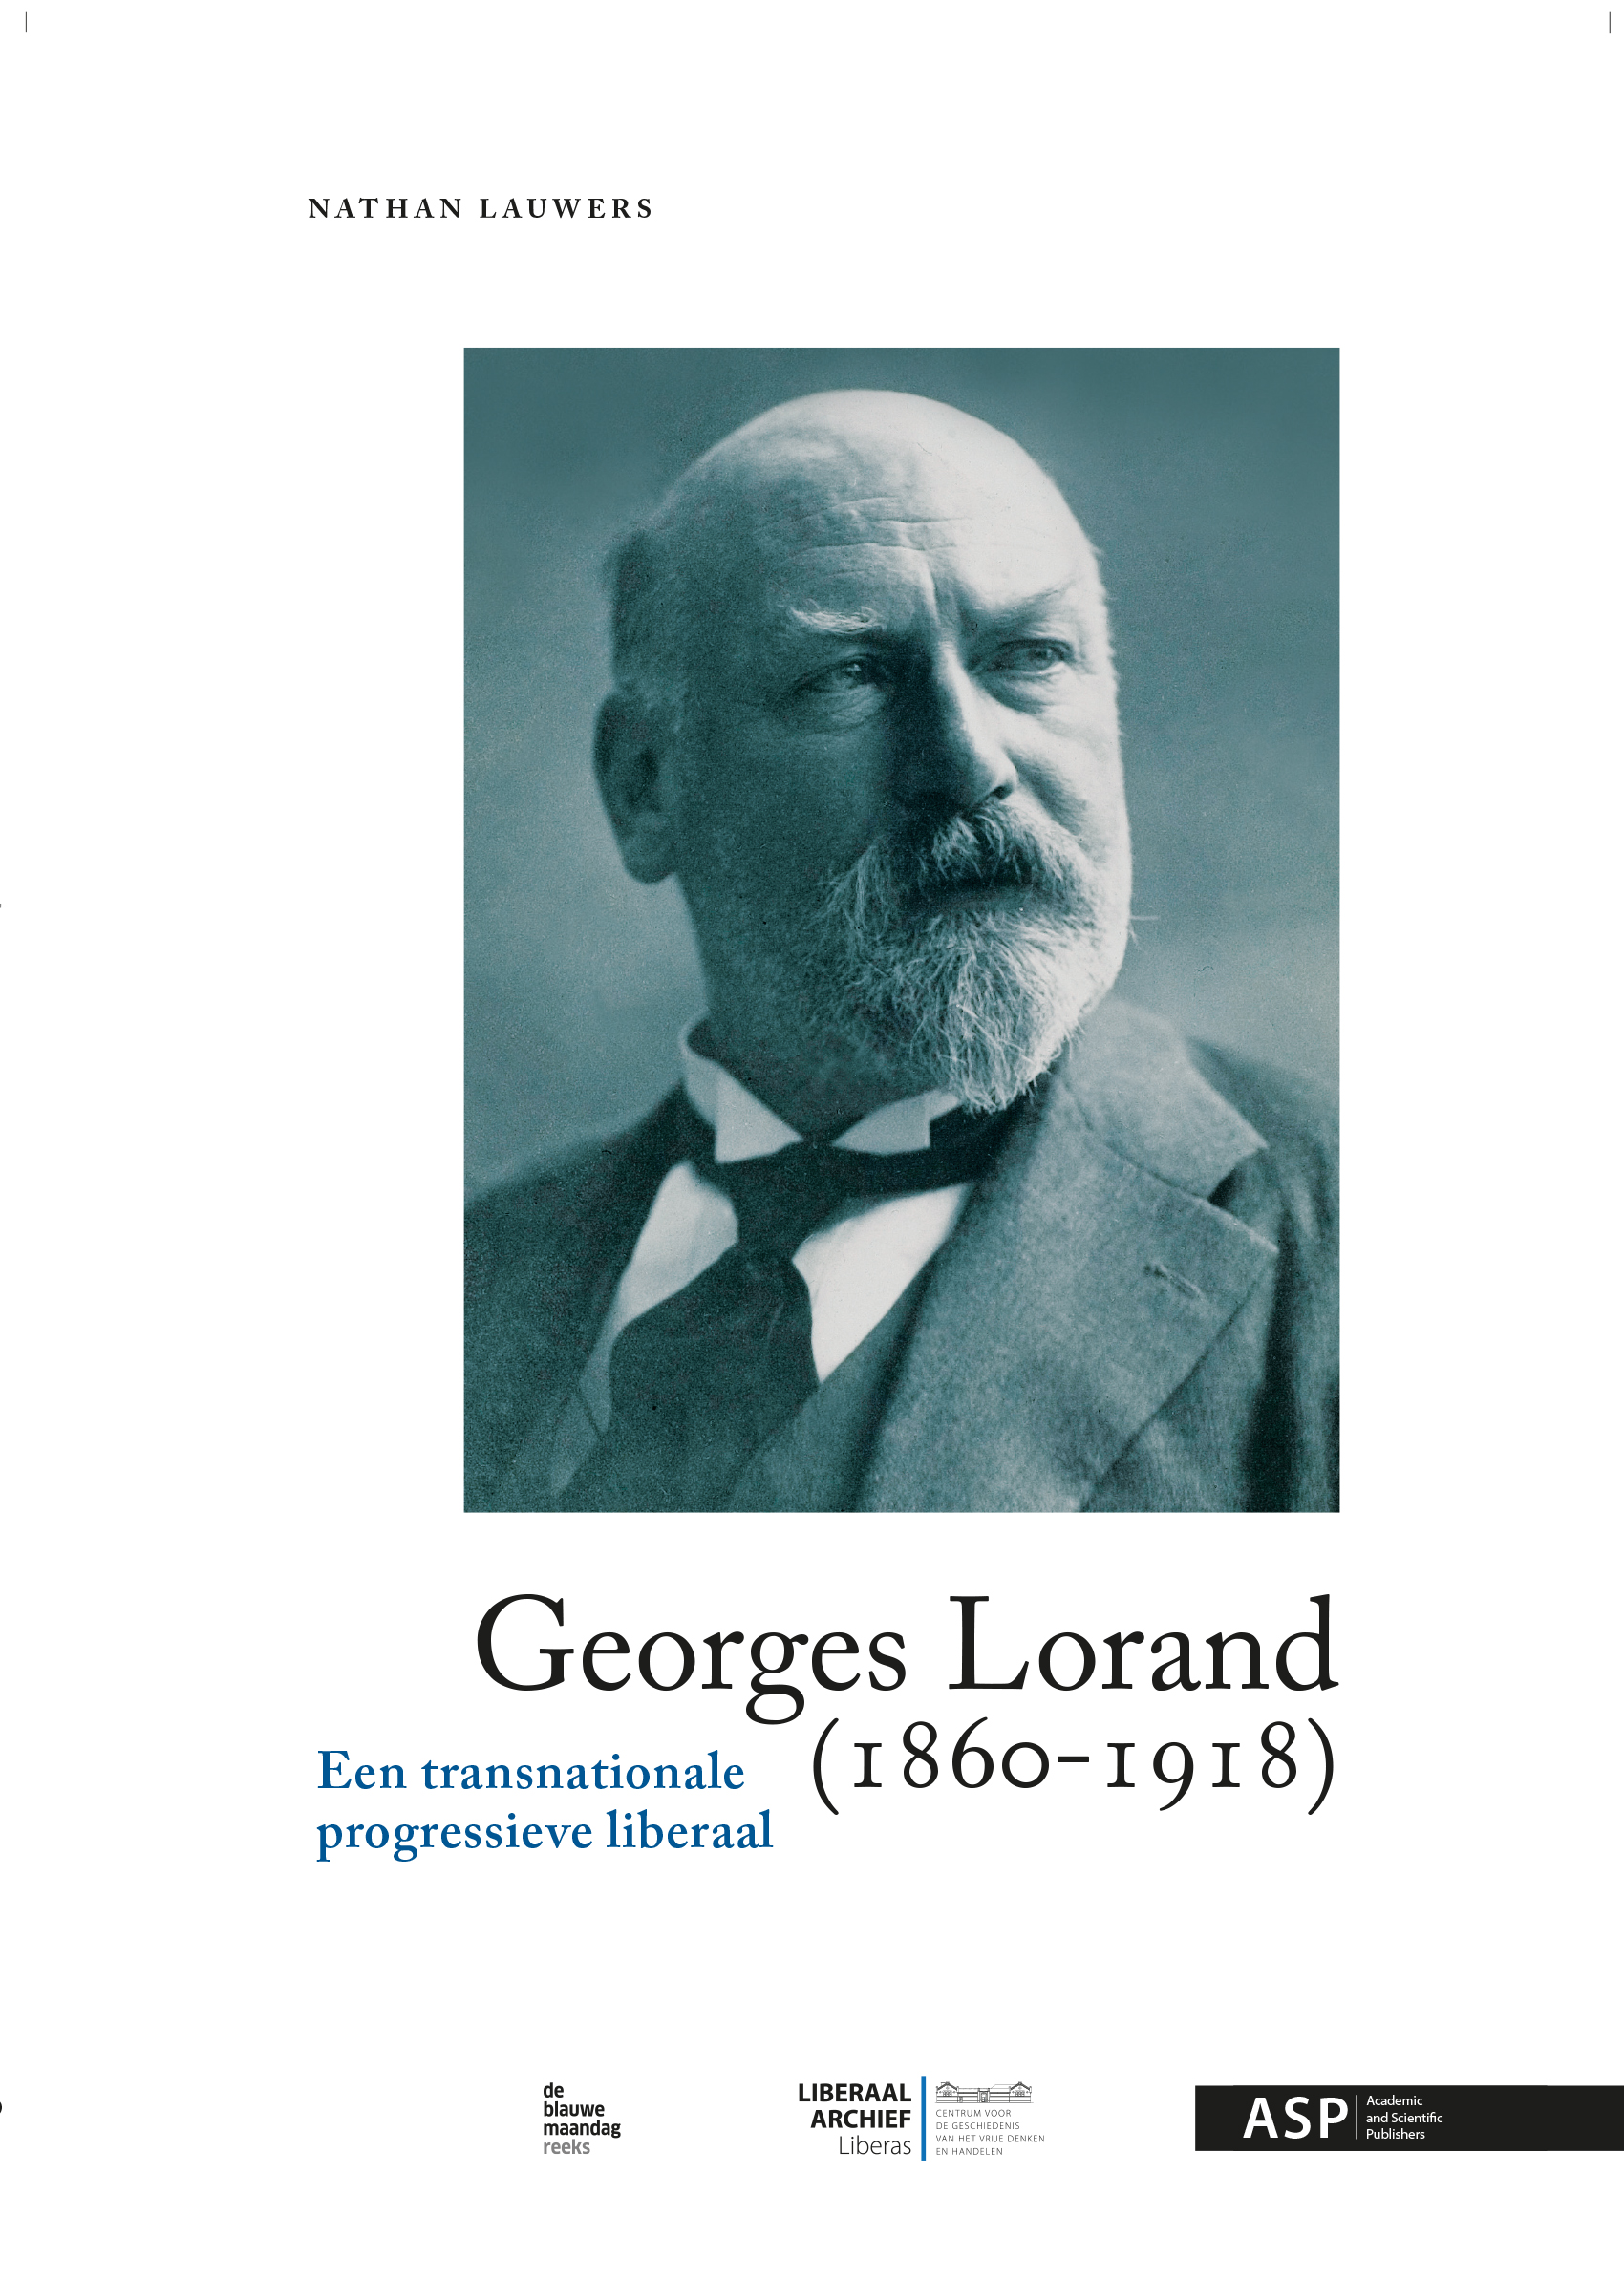 GEORGES LORAND (1860-1918)